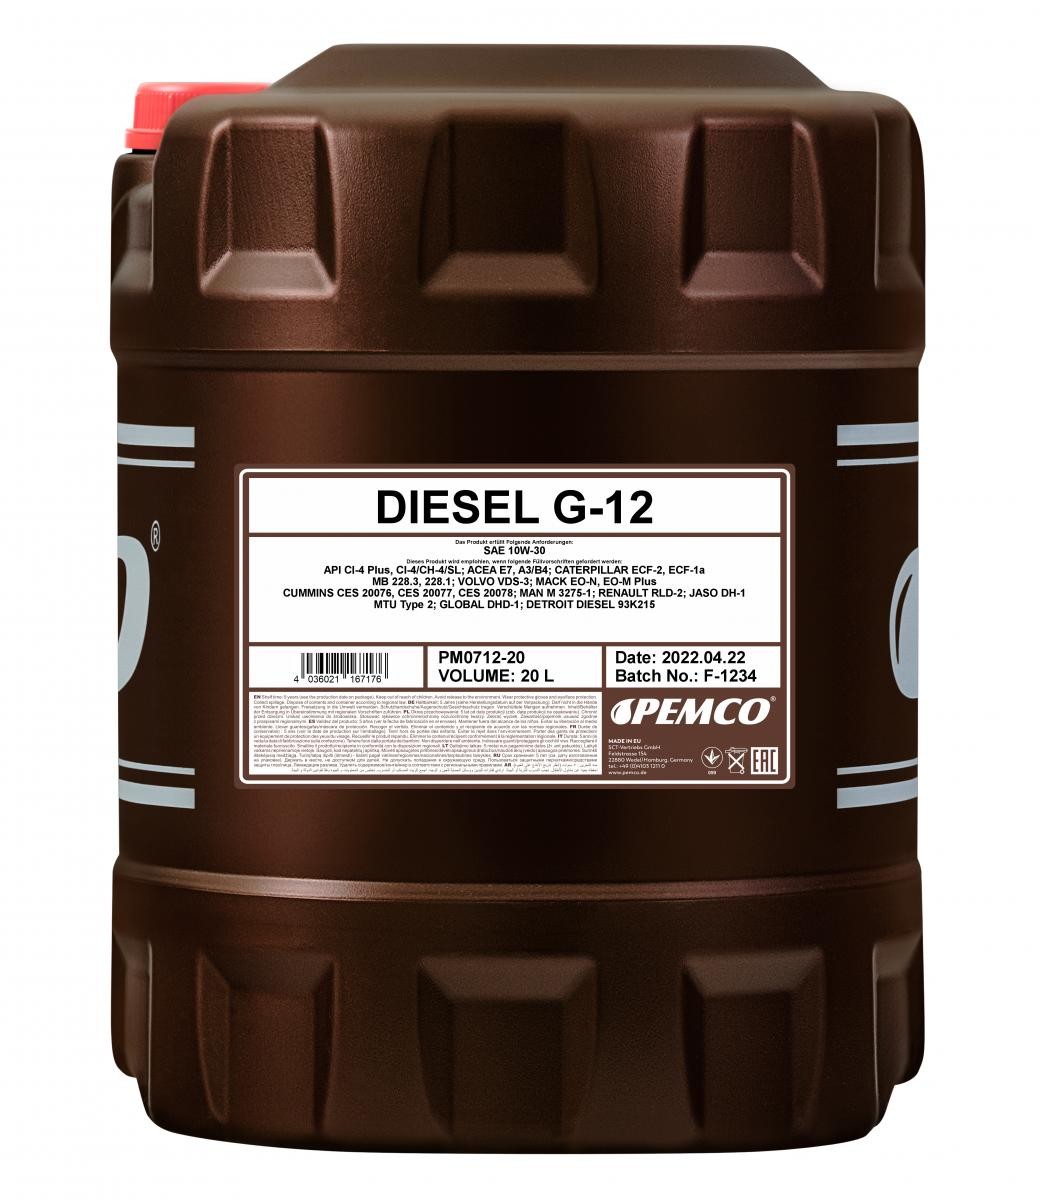 Diesel 15w-40 Mineral CG-4/SL – Mannol